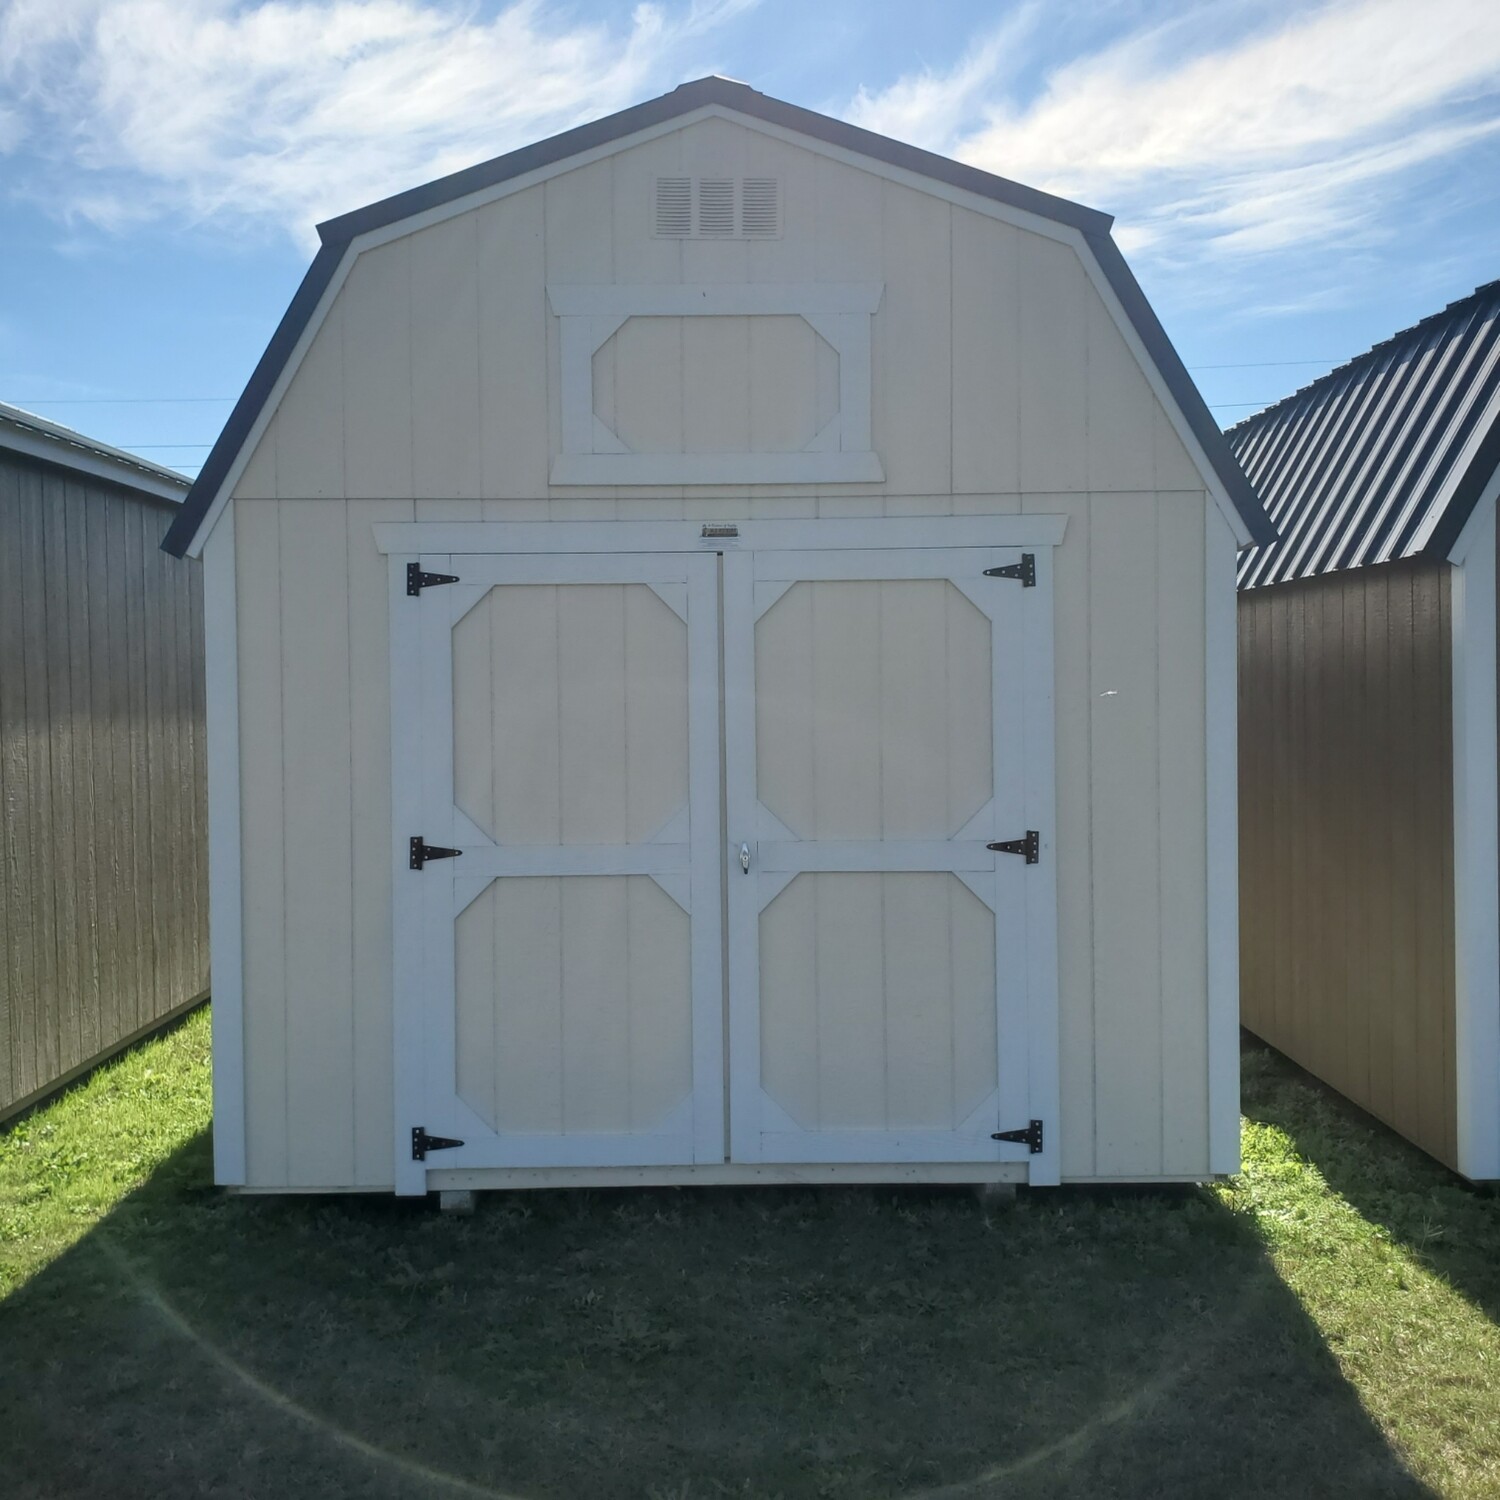 10x16 Lofted Barn  - Front Entrance